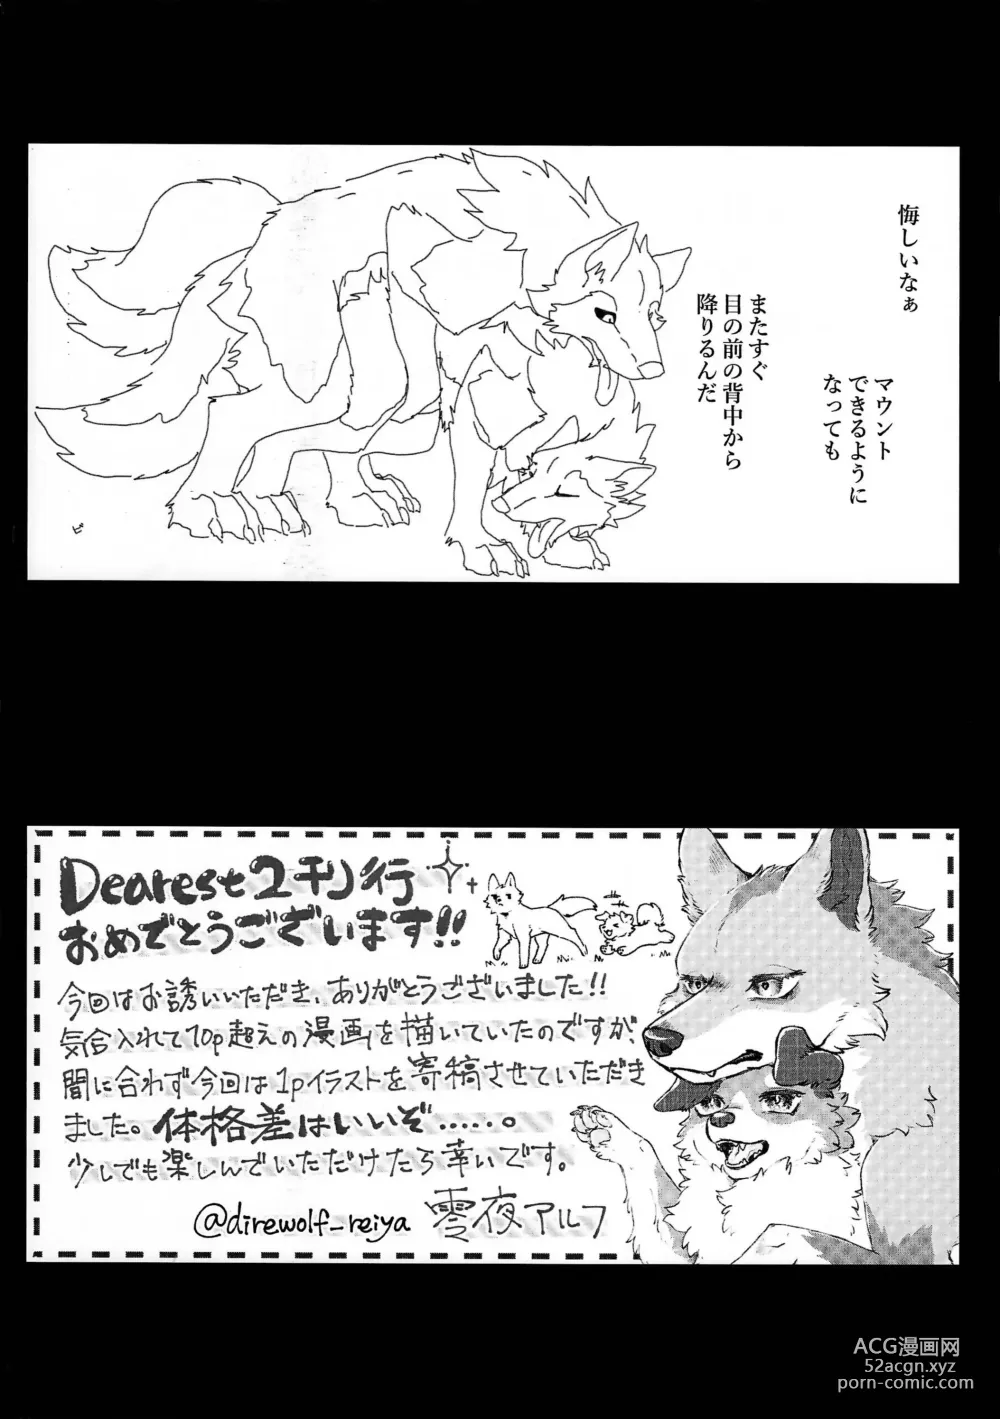 Page 43 of doujinshi Dearest 2